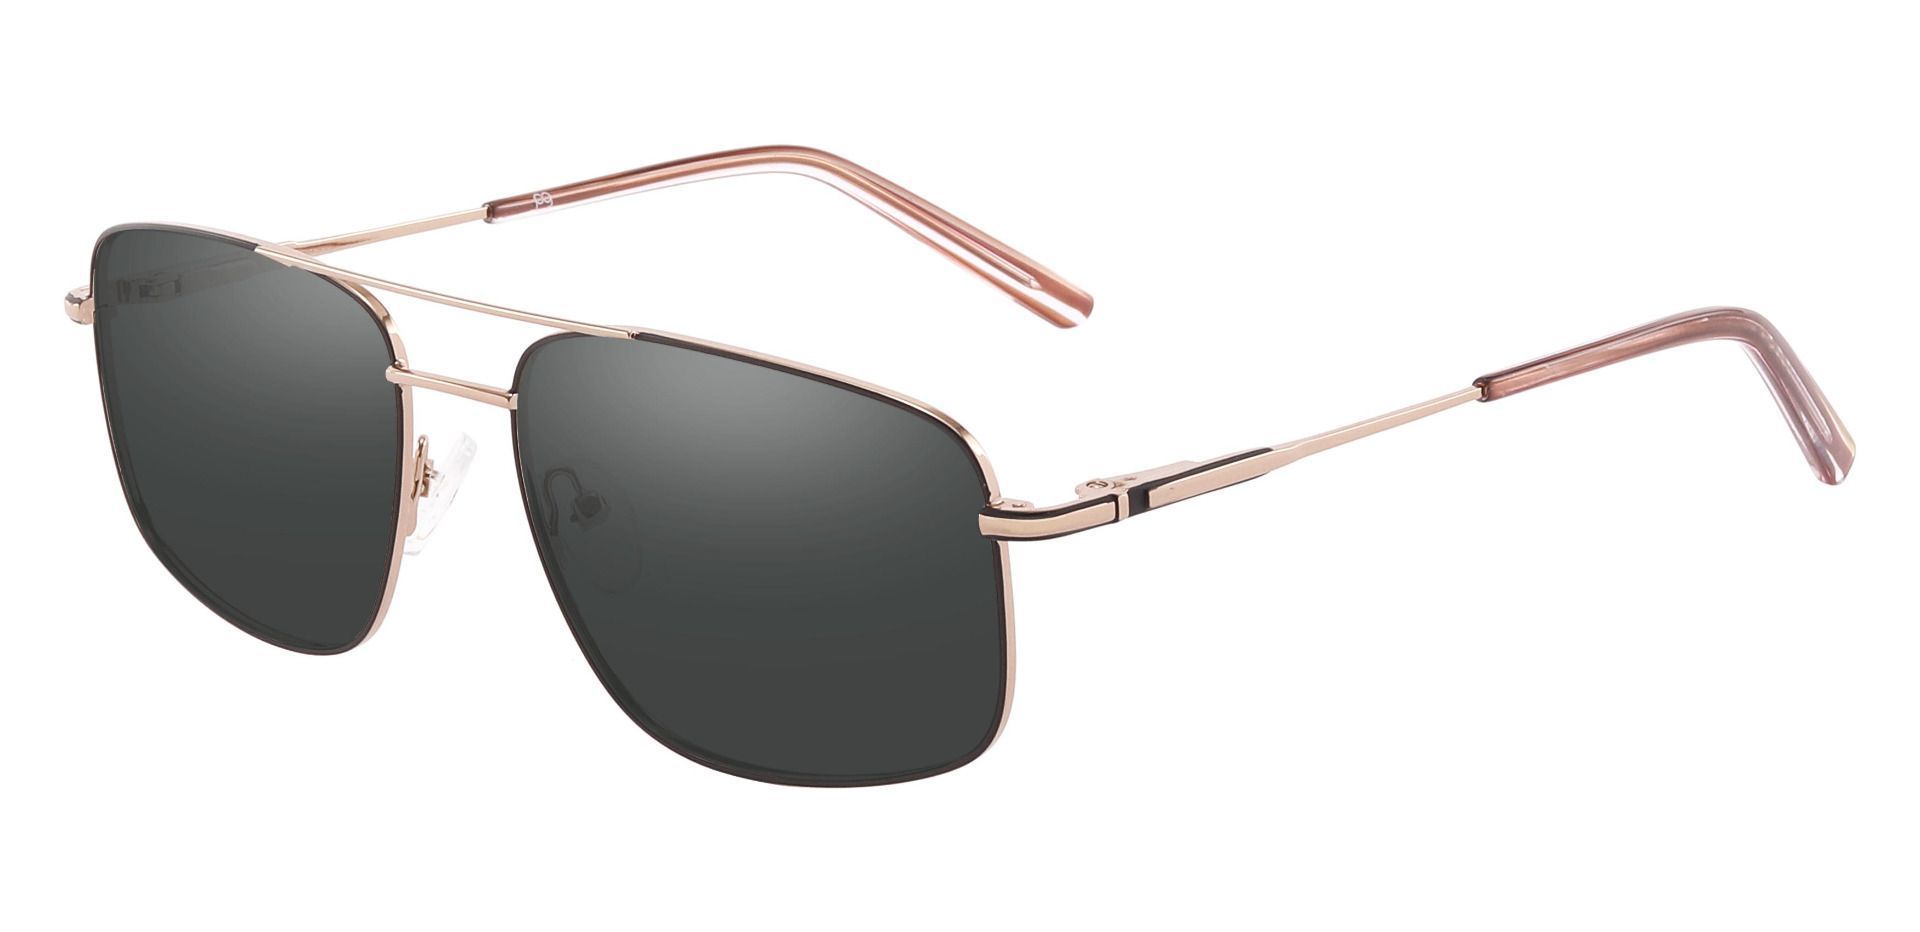 Turner Aviator Lined Bifocal Sunglasses - Gold Frame With Gray Lenses